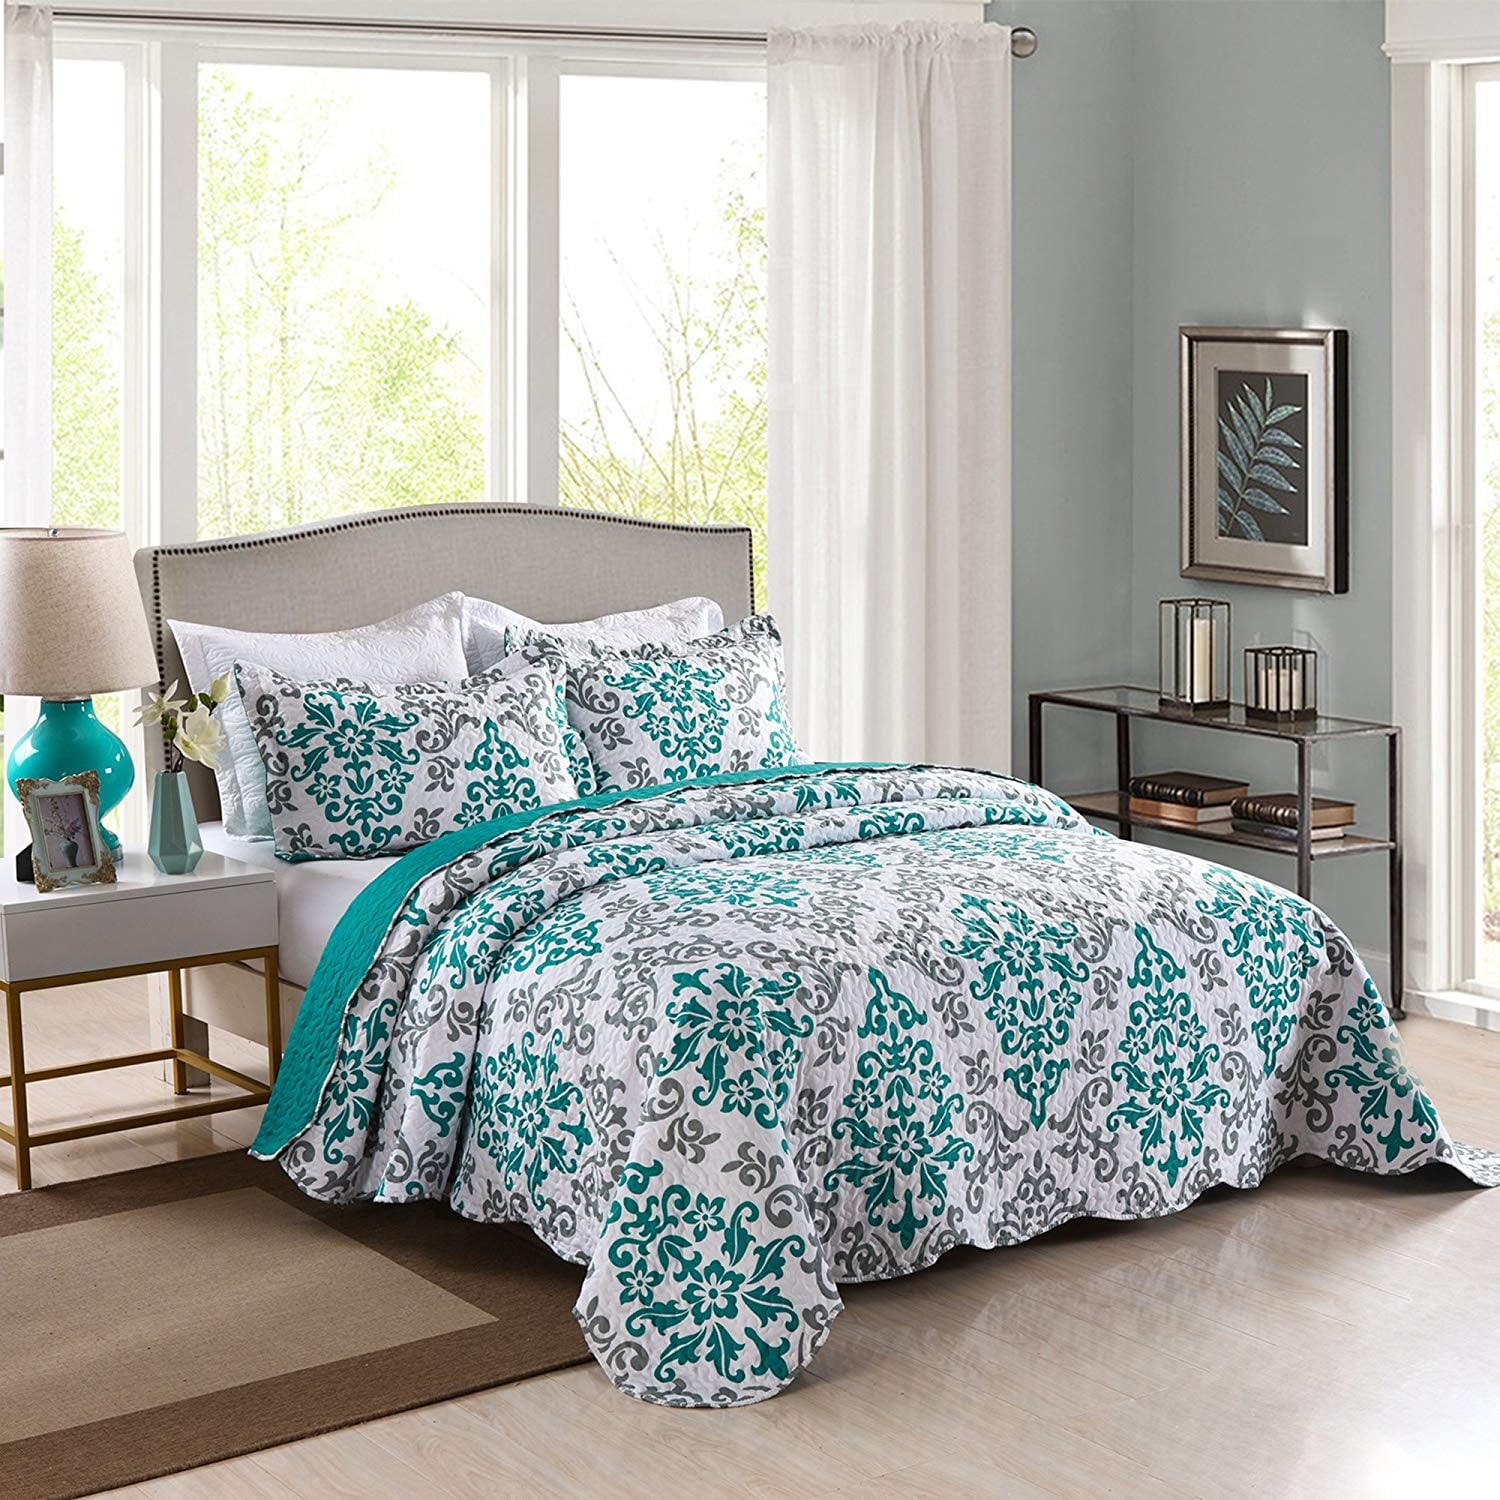 Details about   3 Piece Lightweight Quilt Bedspread Set Bedding Coverlet Set Oversize BY011 